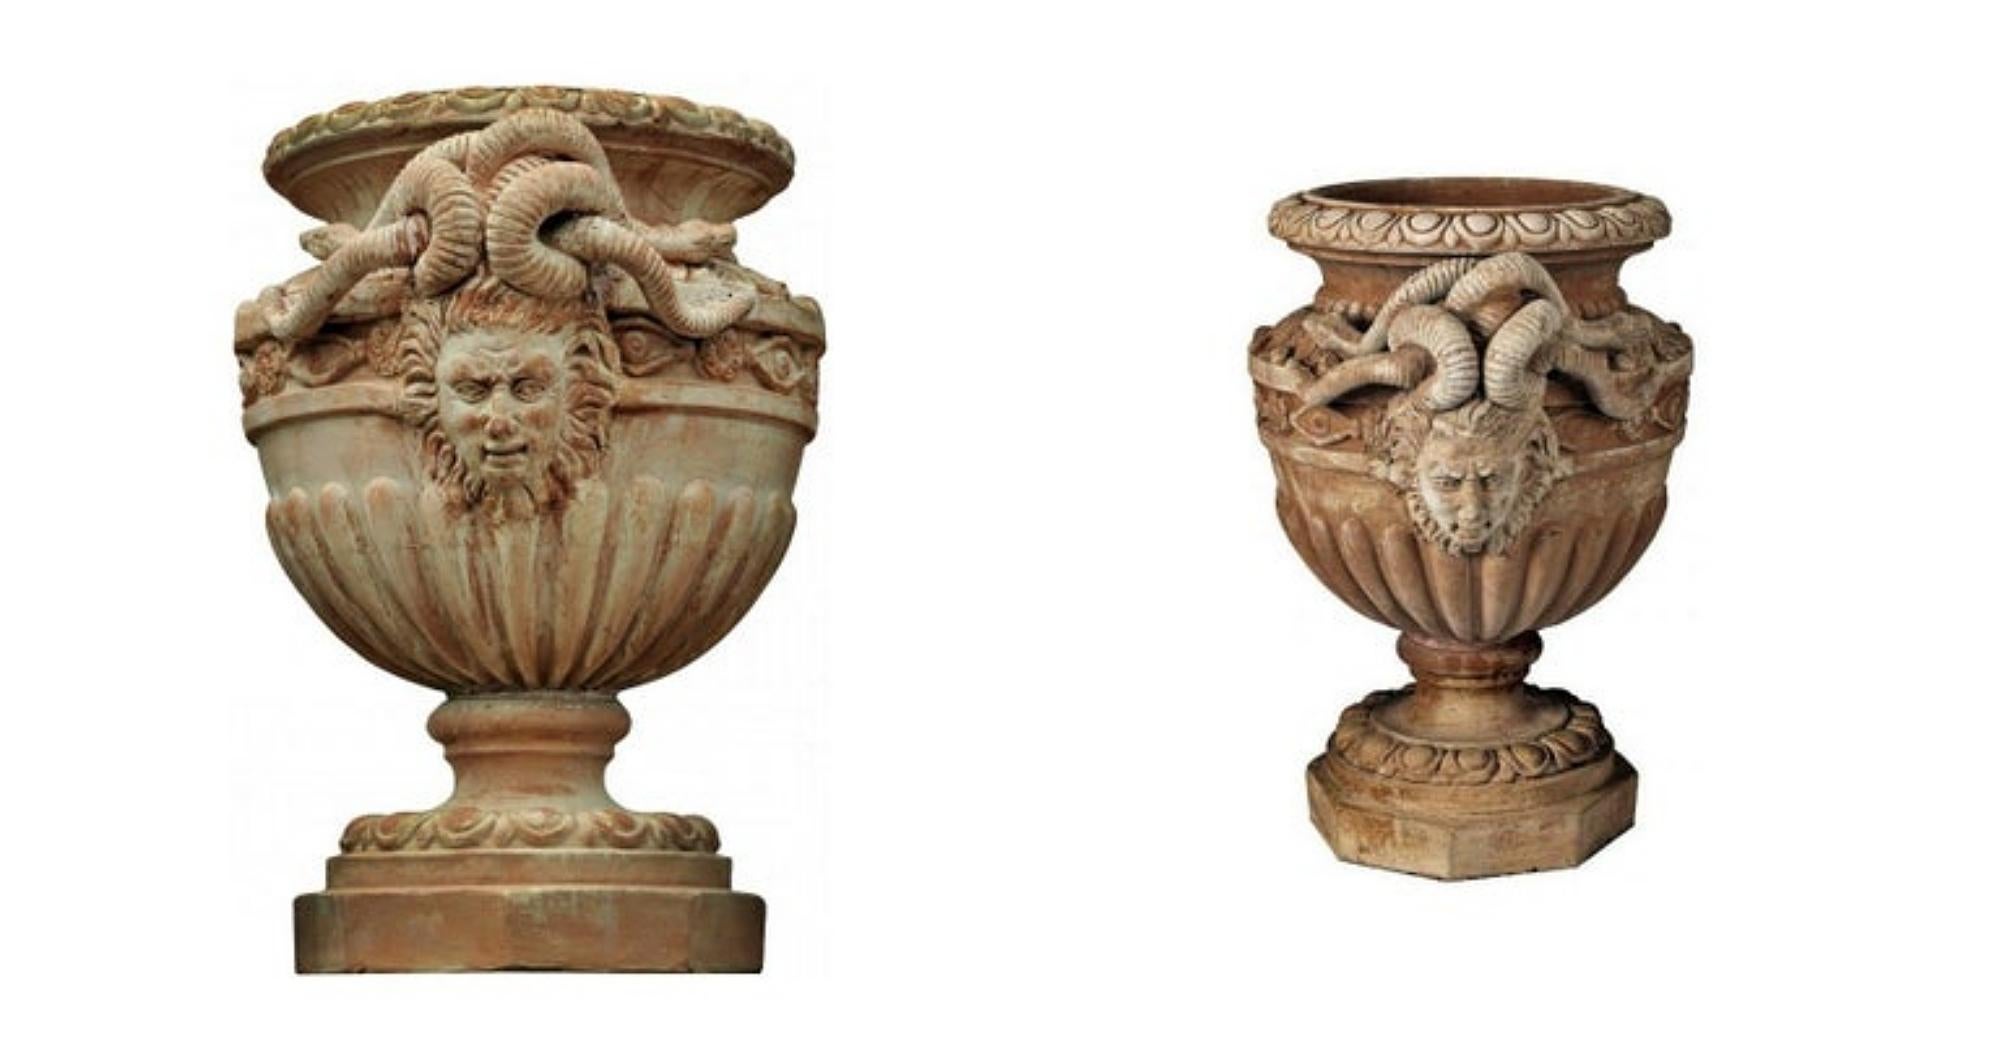 Italian Large Mediceo Florentine Renaissance Vase with Medusas Early 20th Century For Sale